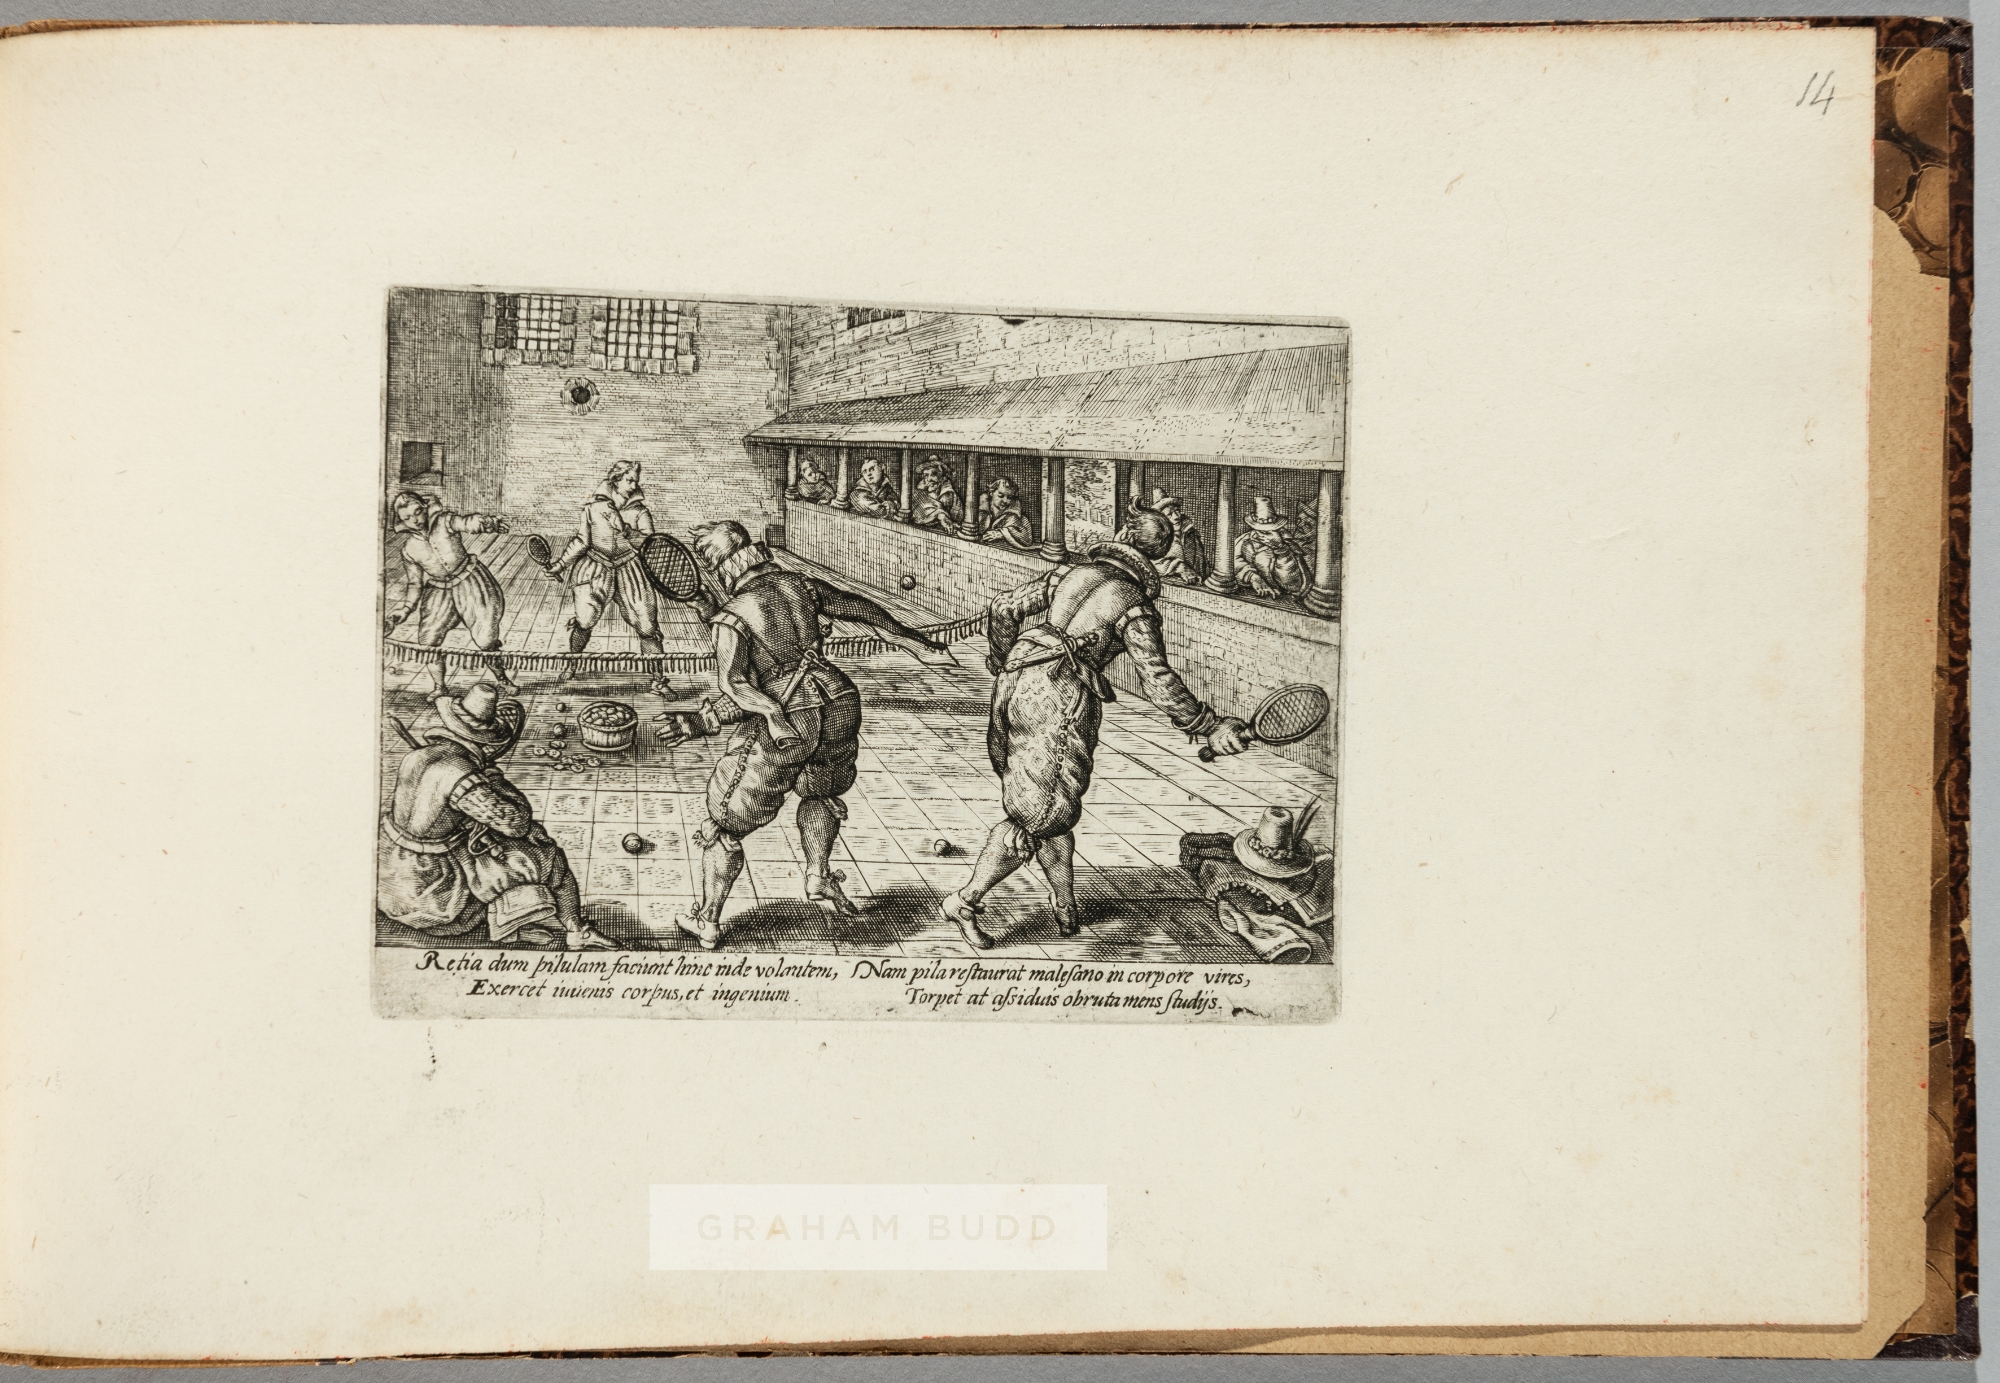 A Dutch 17th century book by Crispijn de Passe titled ‘Academia sive speculum vitae scholasticae’